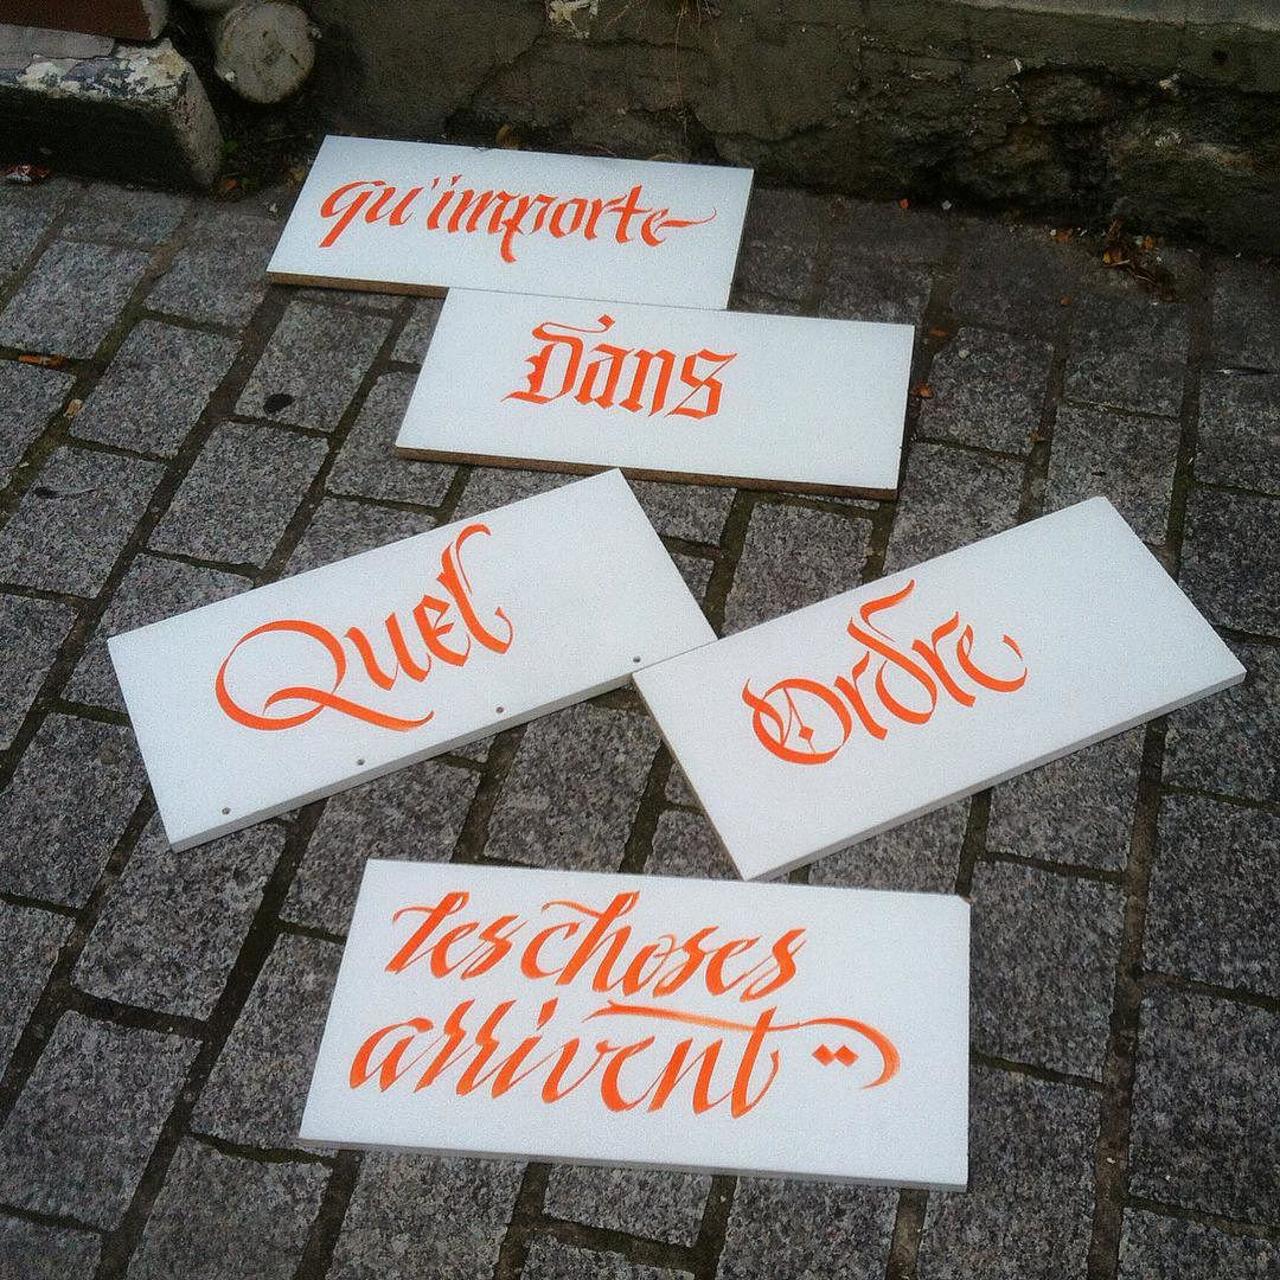 RT @circumjacent_fr: #Paris #graffiti photo by @garbagebeauty http://ift.tt/1PAlIVR #StreetArt http://t.co/OzsMYxvuwl